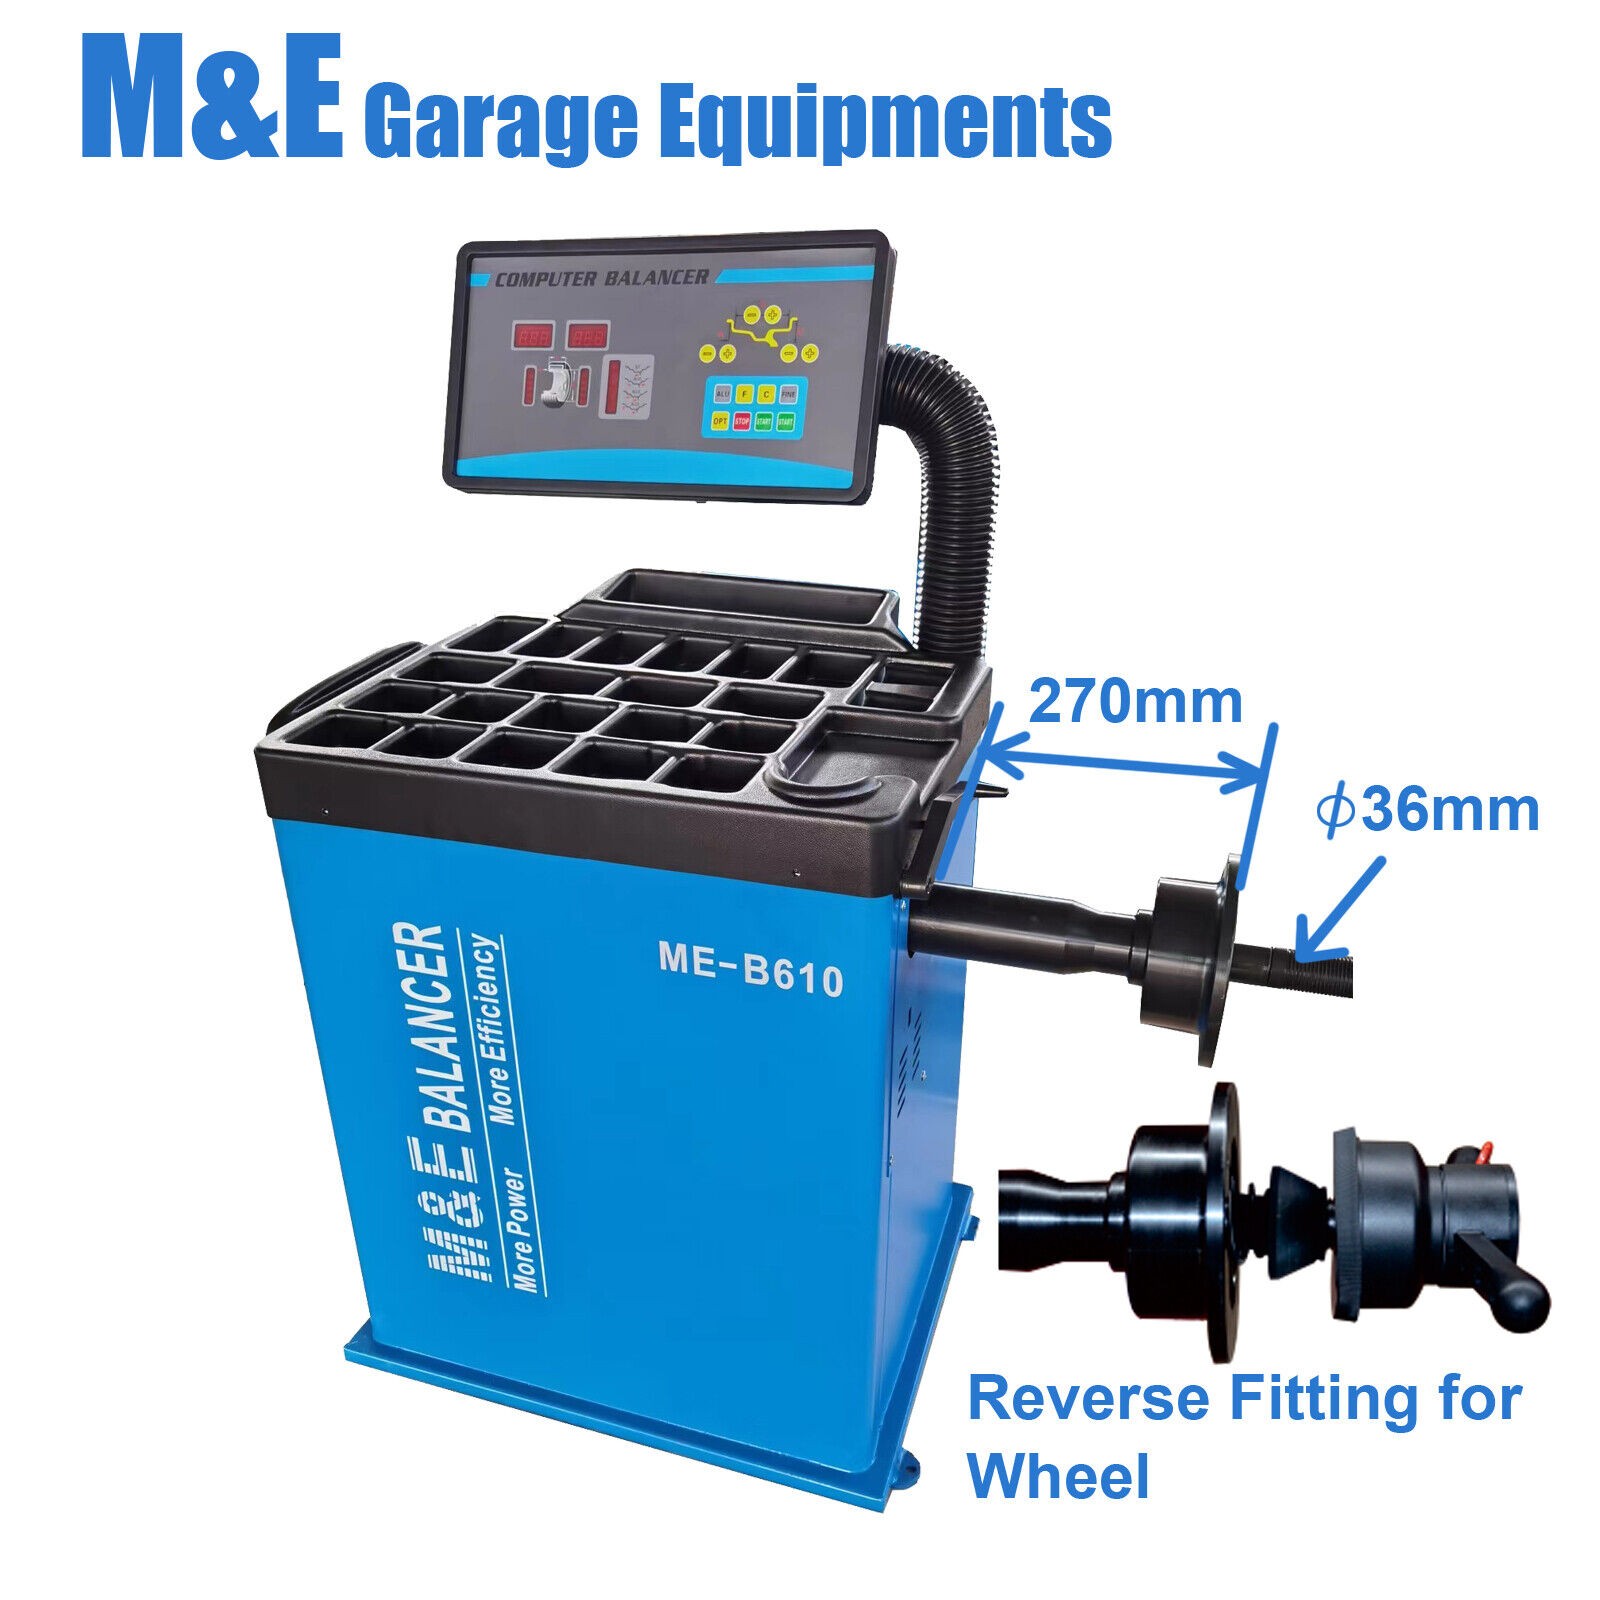 Tire Changer Machine ME-T530 + Wheel Balancer ME-B610 Garage Equipment